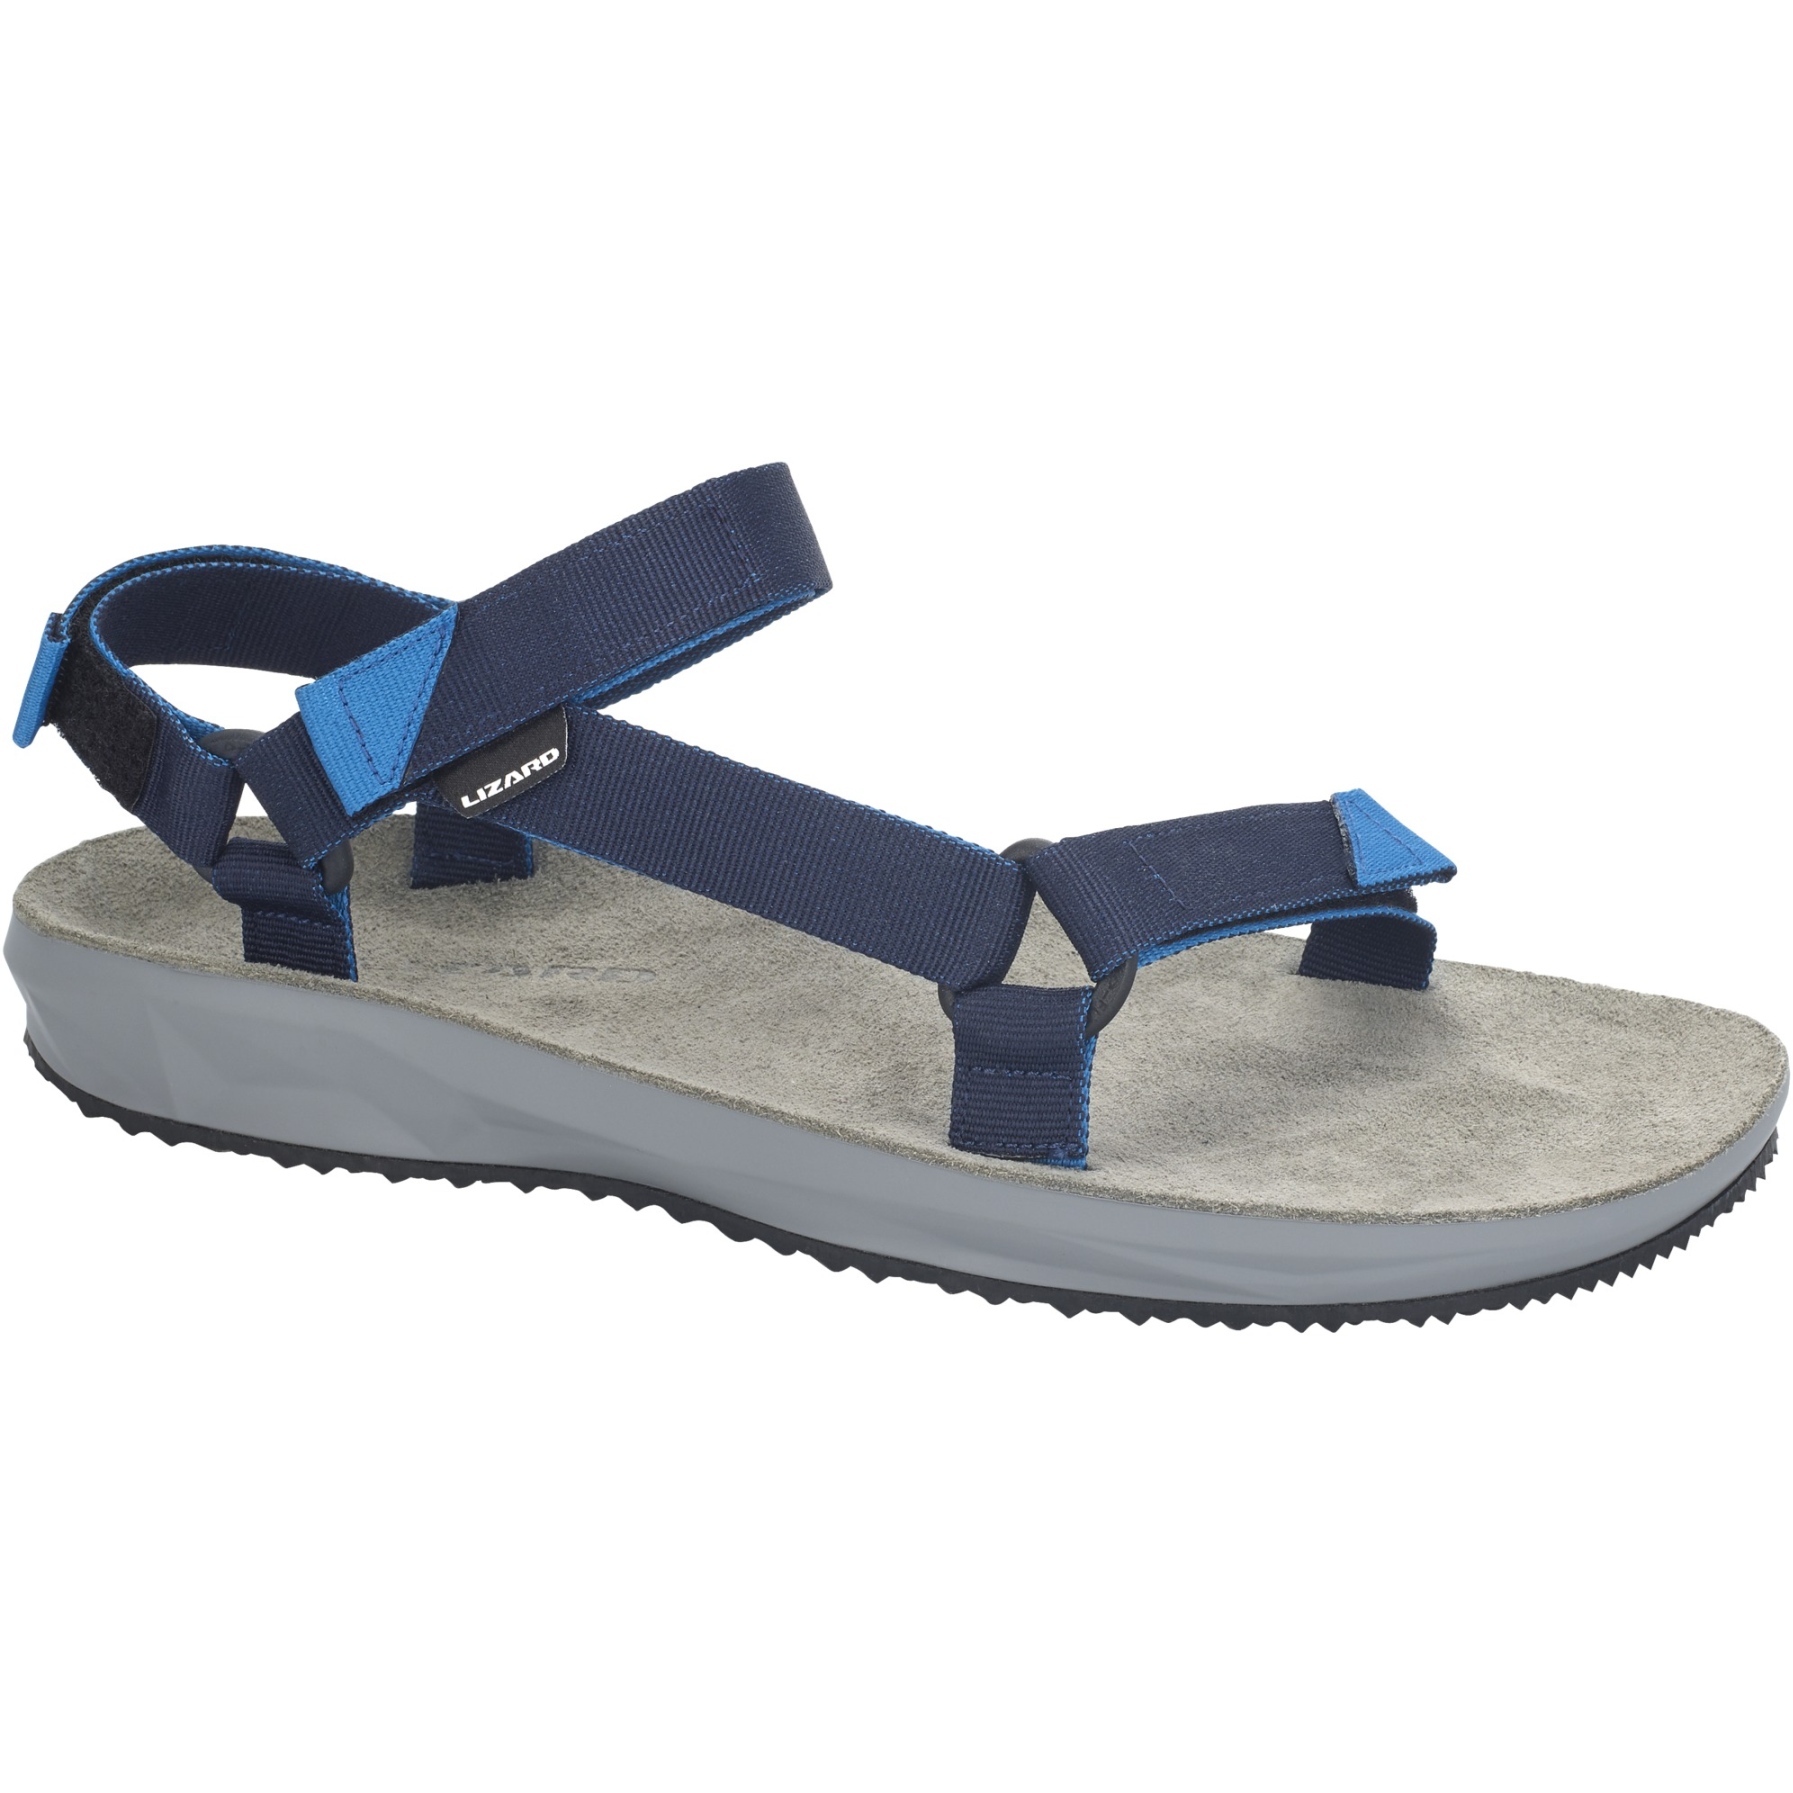 Picture of Lizard Footwear Hike Sandals - midnight blue/atlantic blue